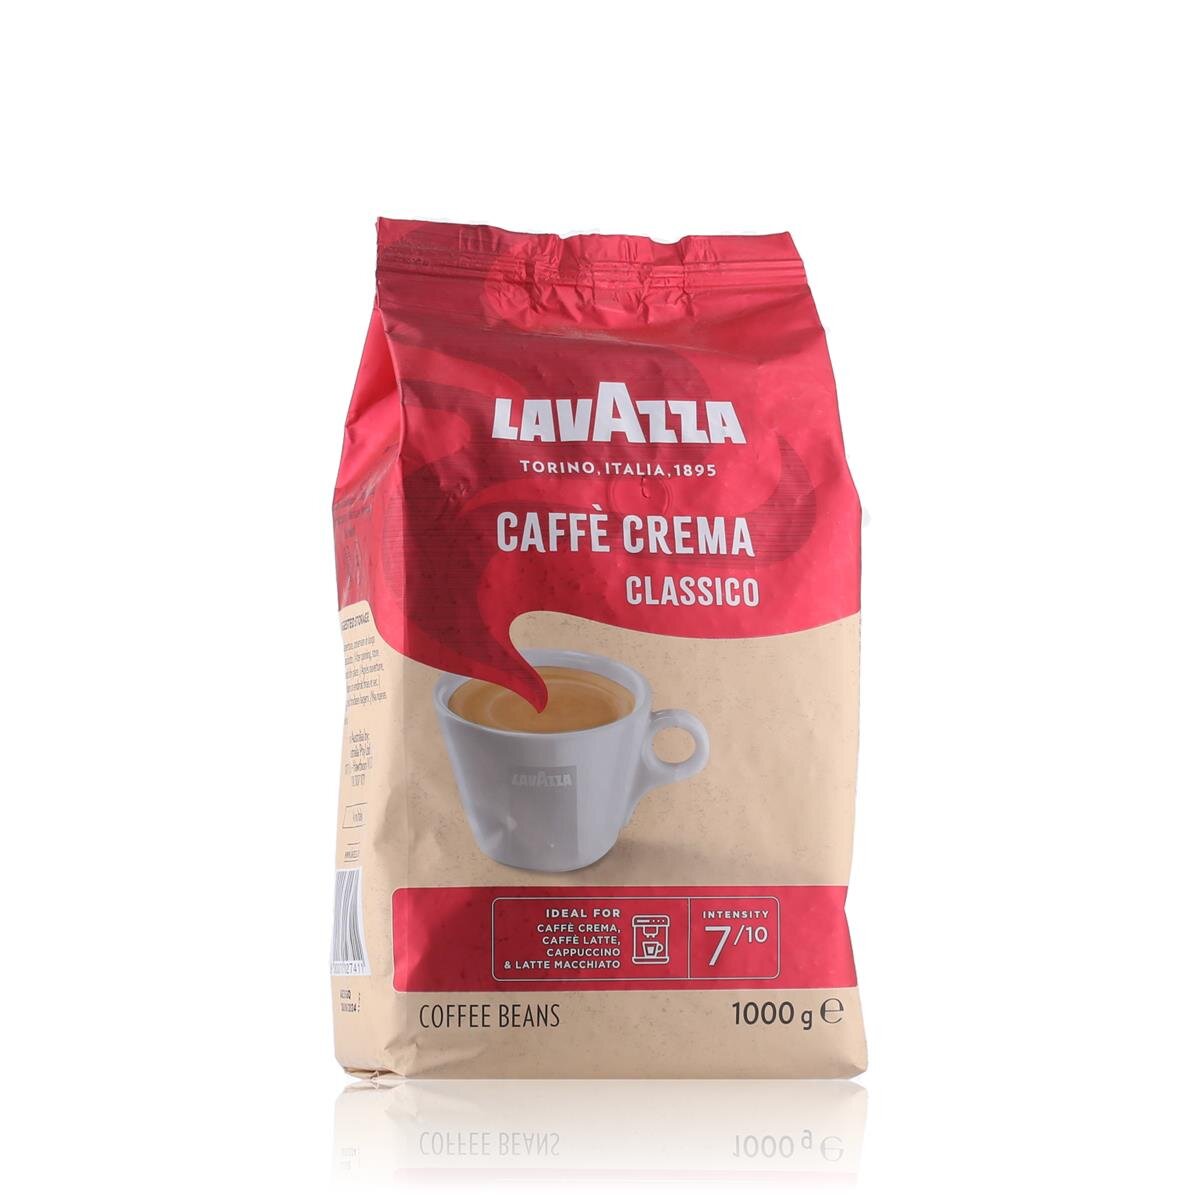 ganze € 7/10 Kaffee 1kg, Bohnen Classico 12,99 Crema Lavazza Caffè